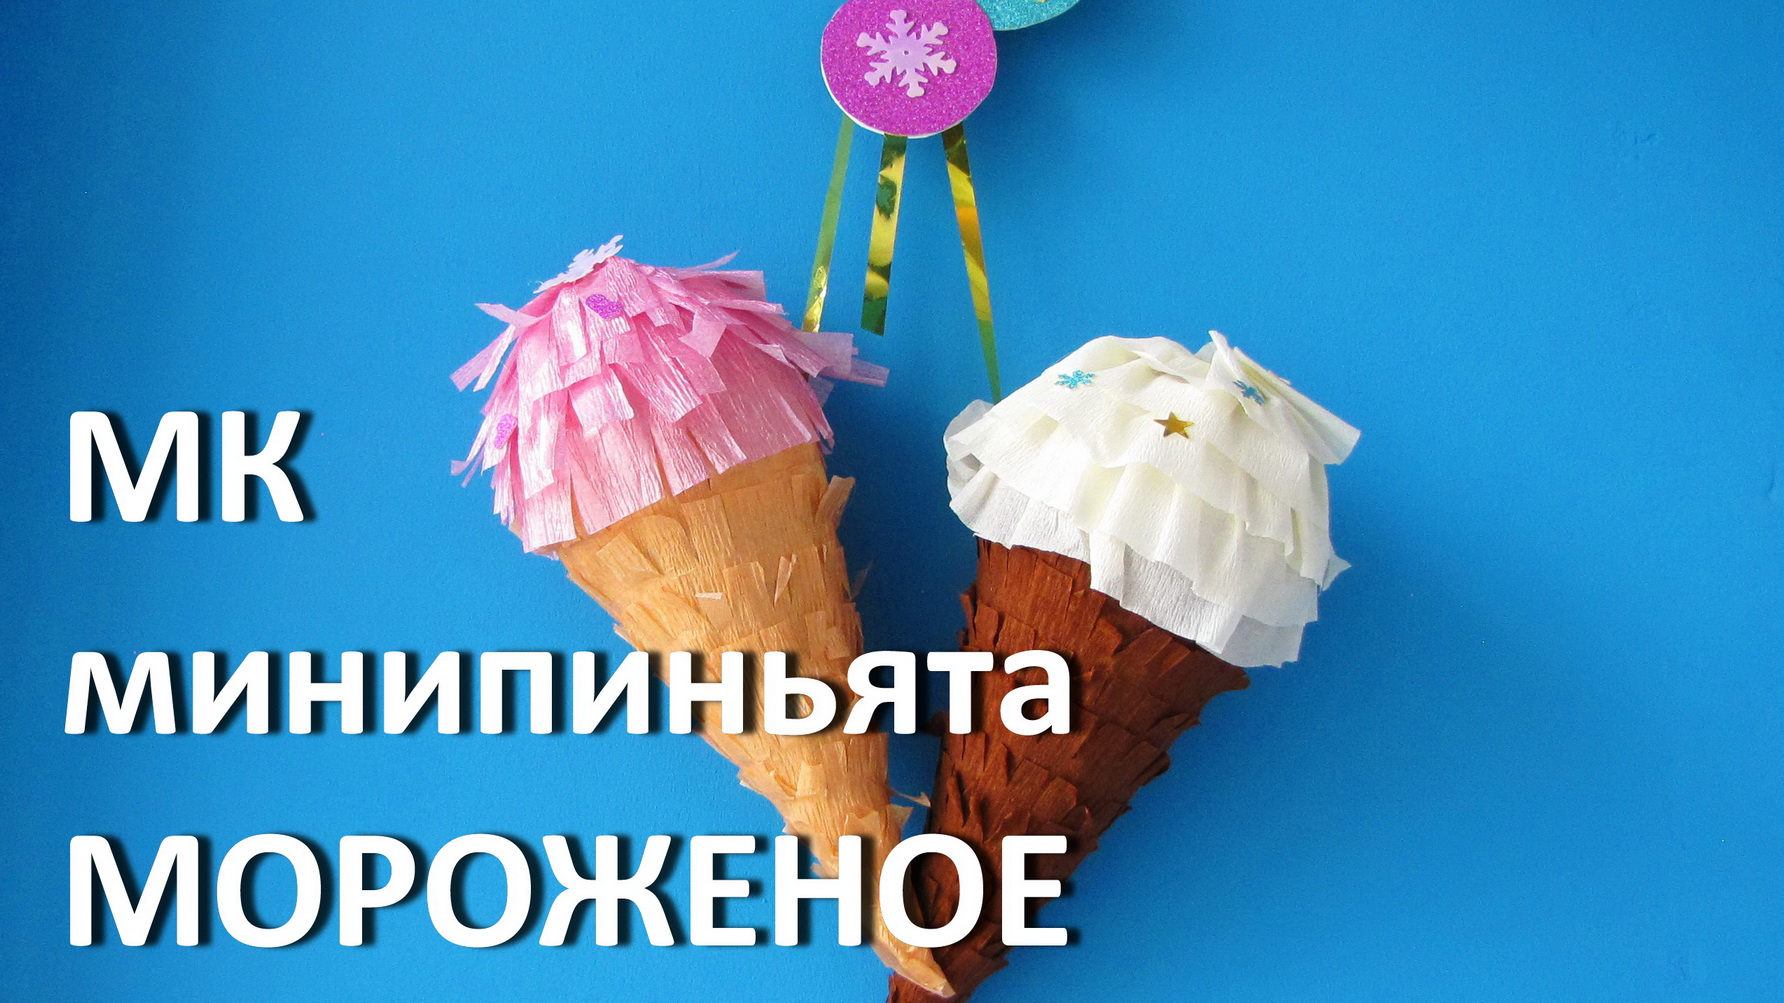 ПИНЬЯТА Мороженое своими руками. МК минипиньята. DIY Minipinata ice cream